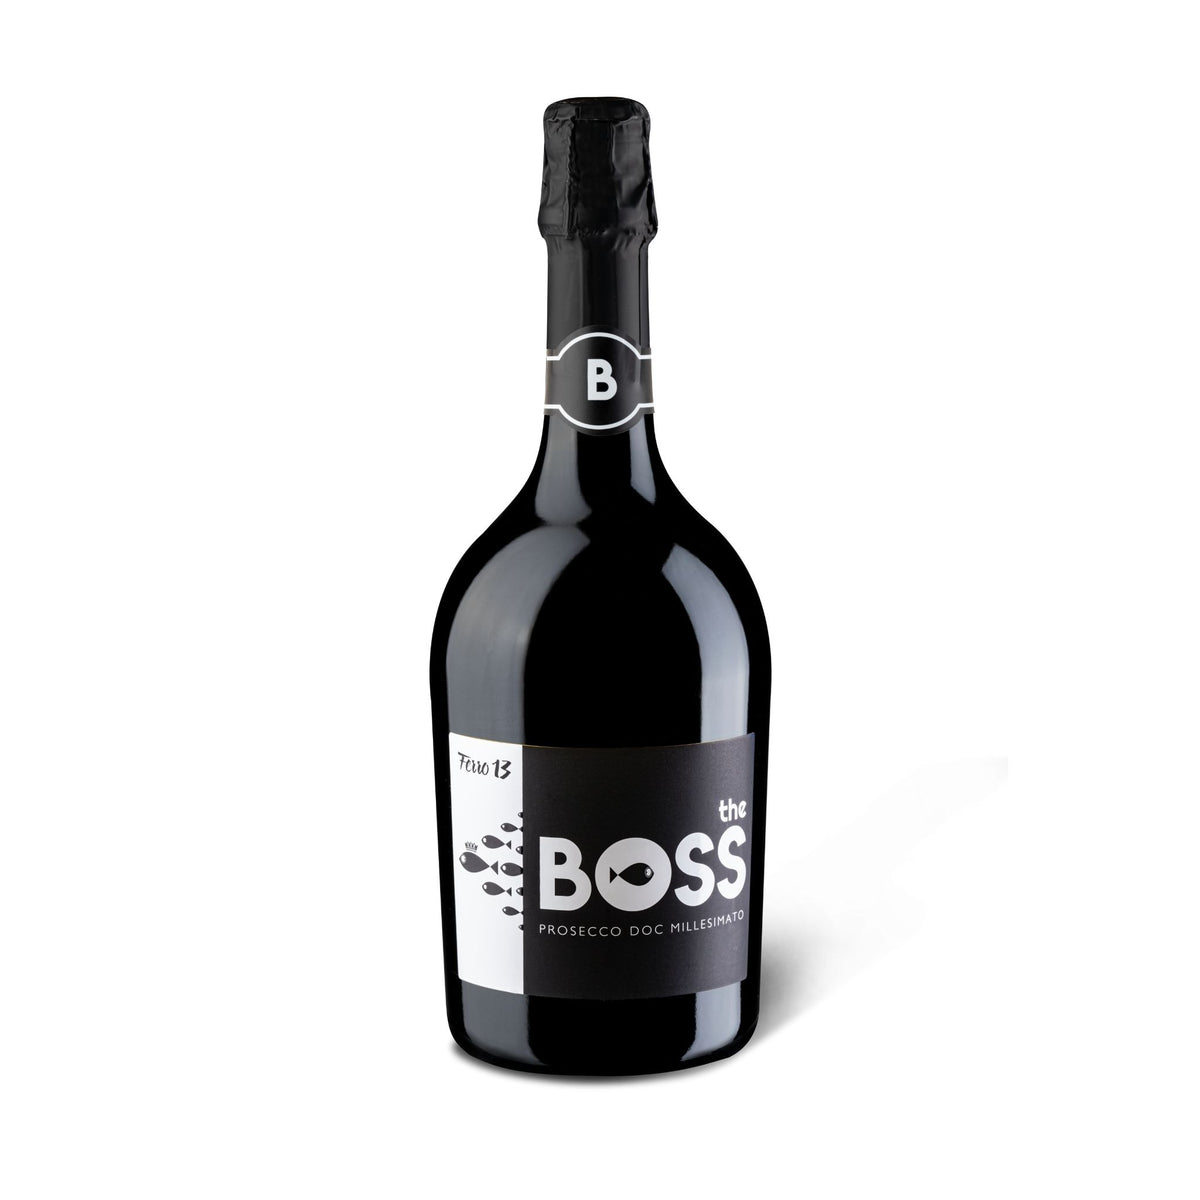 Ferro13 TheBoss Prosecco Doc Millesimato Extra Dry Veneto Valdo online kaufen vivino geile weine vinmio vino lecker vino24 weinshop